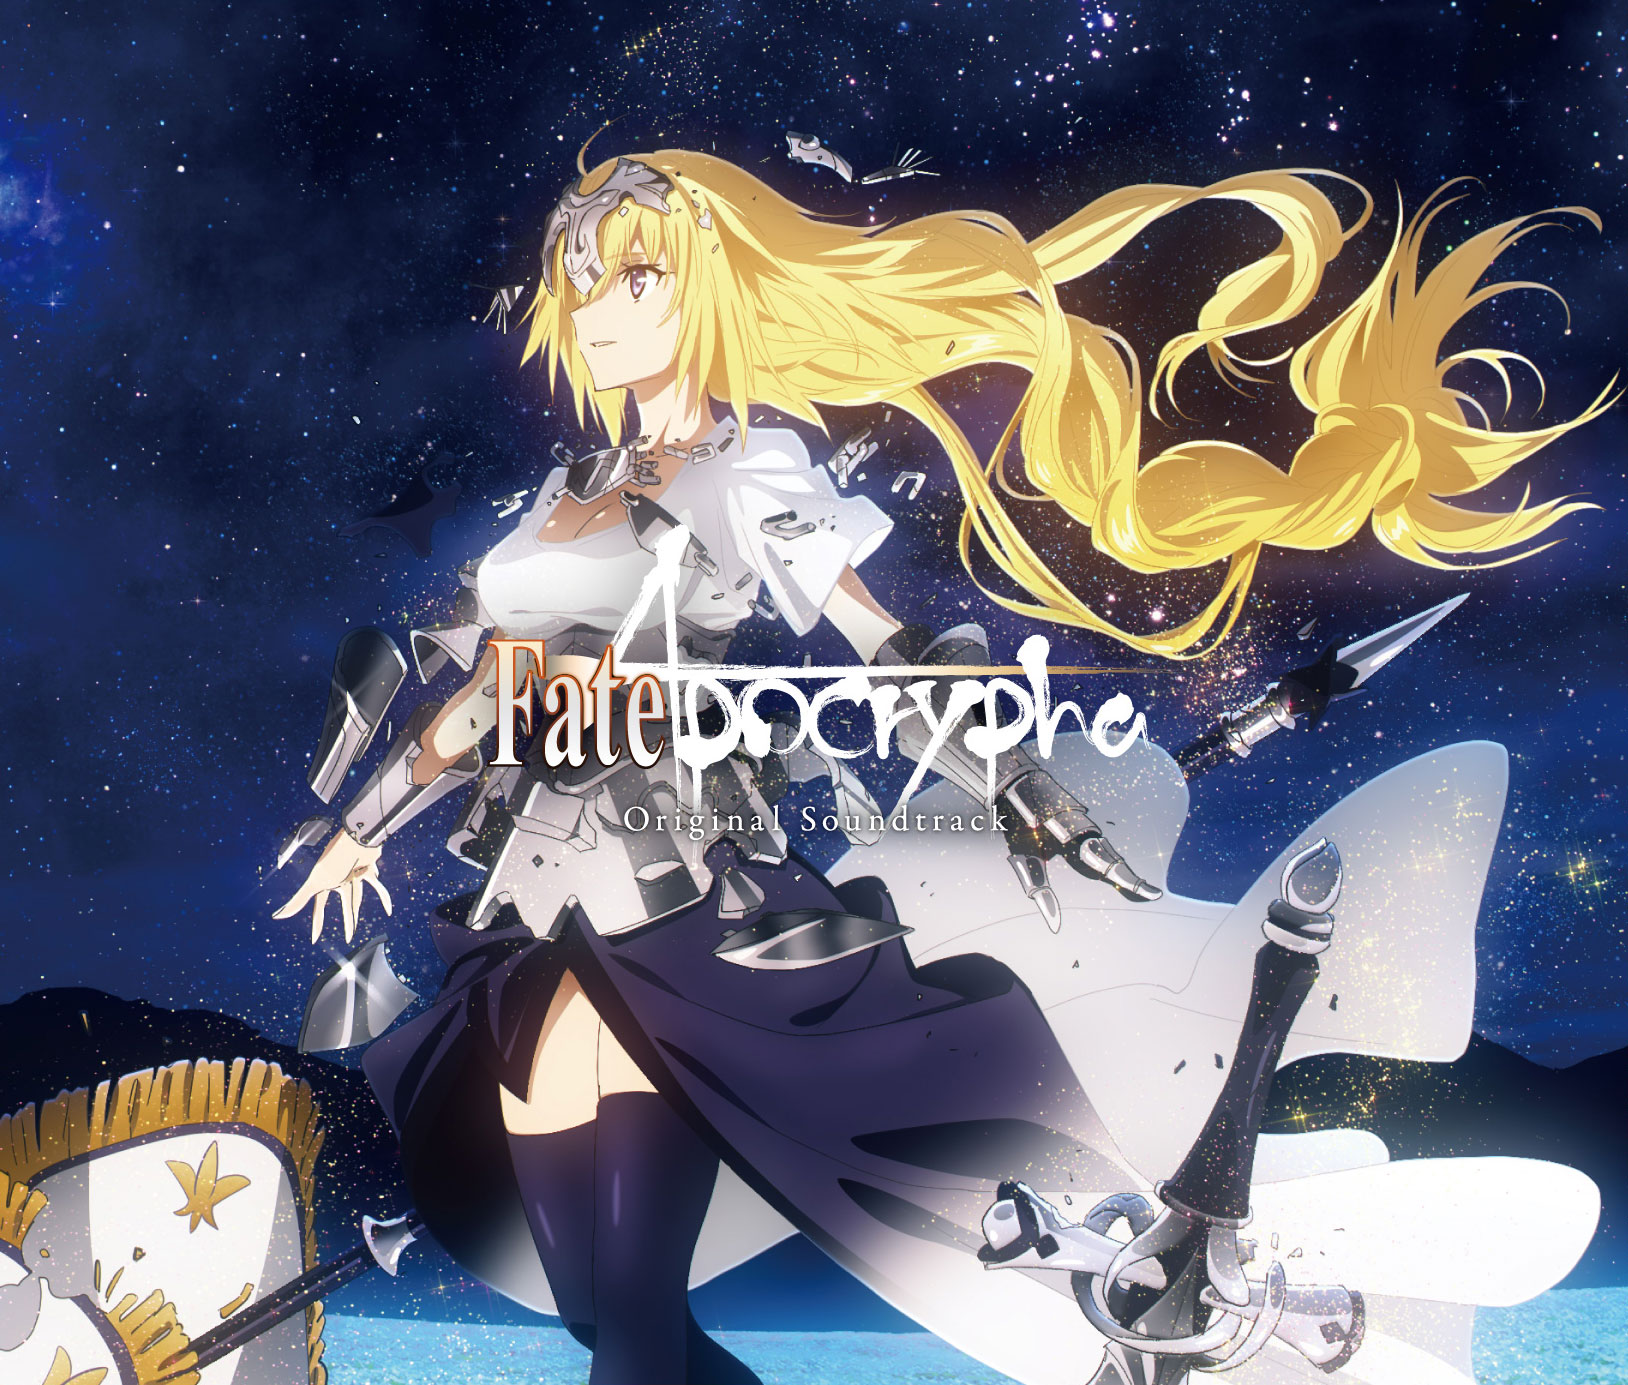 Fate Apocrypha Original Soundtrack 山田有慶描き下ろしジャケットイラストを公開 株式会社アニプレックスのプレスリリース